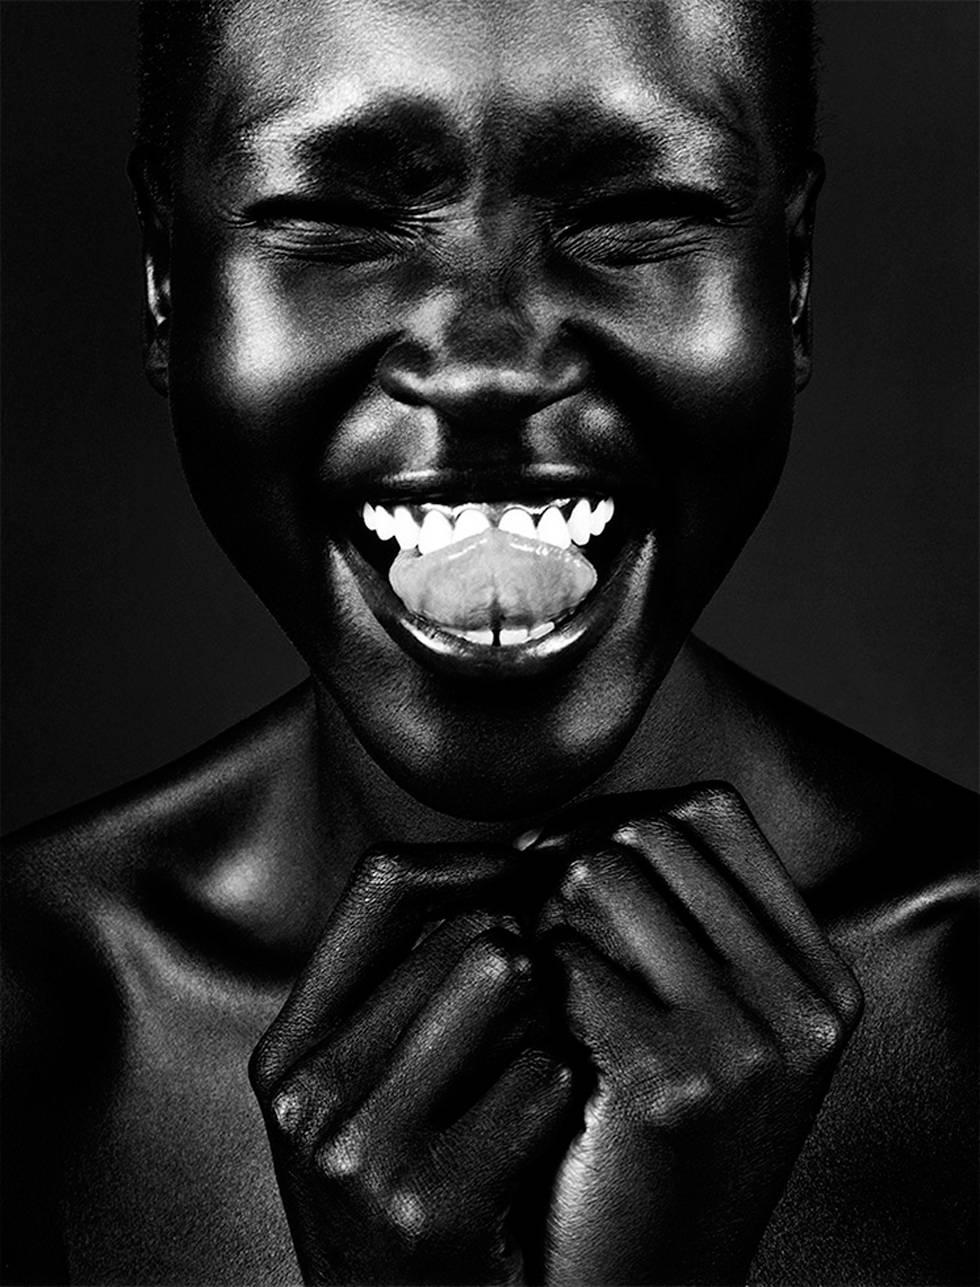 Black and White Photograph Max Cardelli - Alek Wek